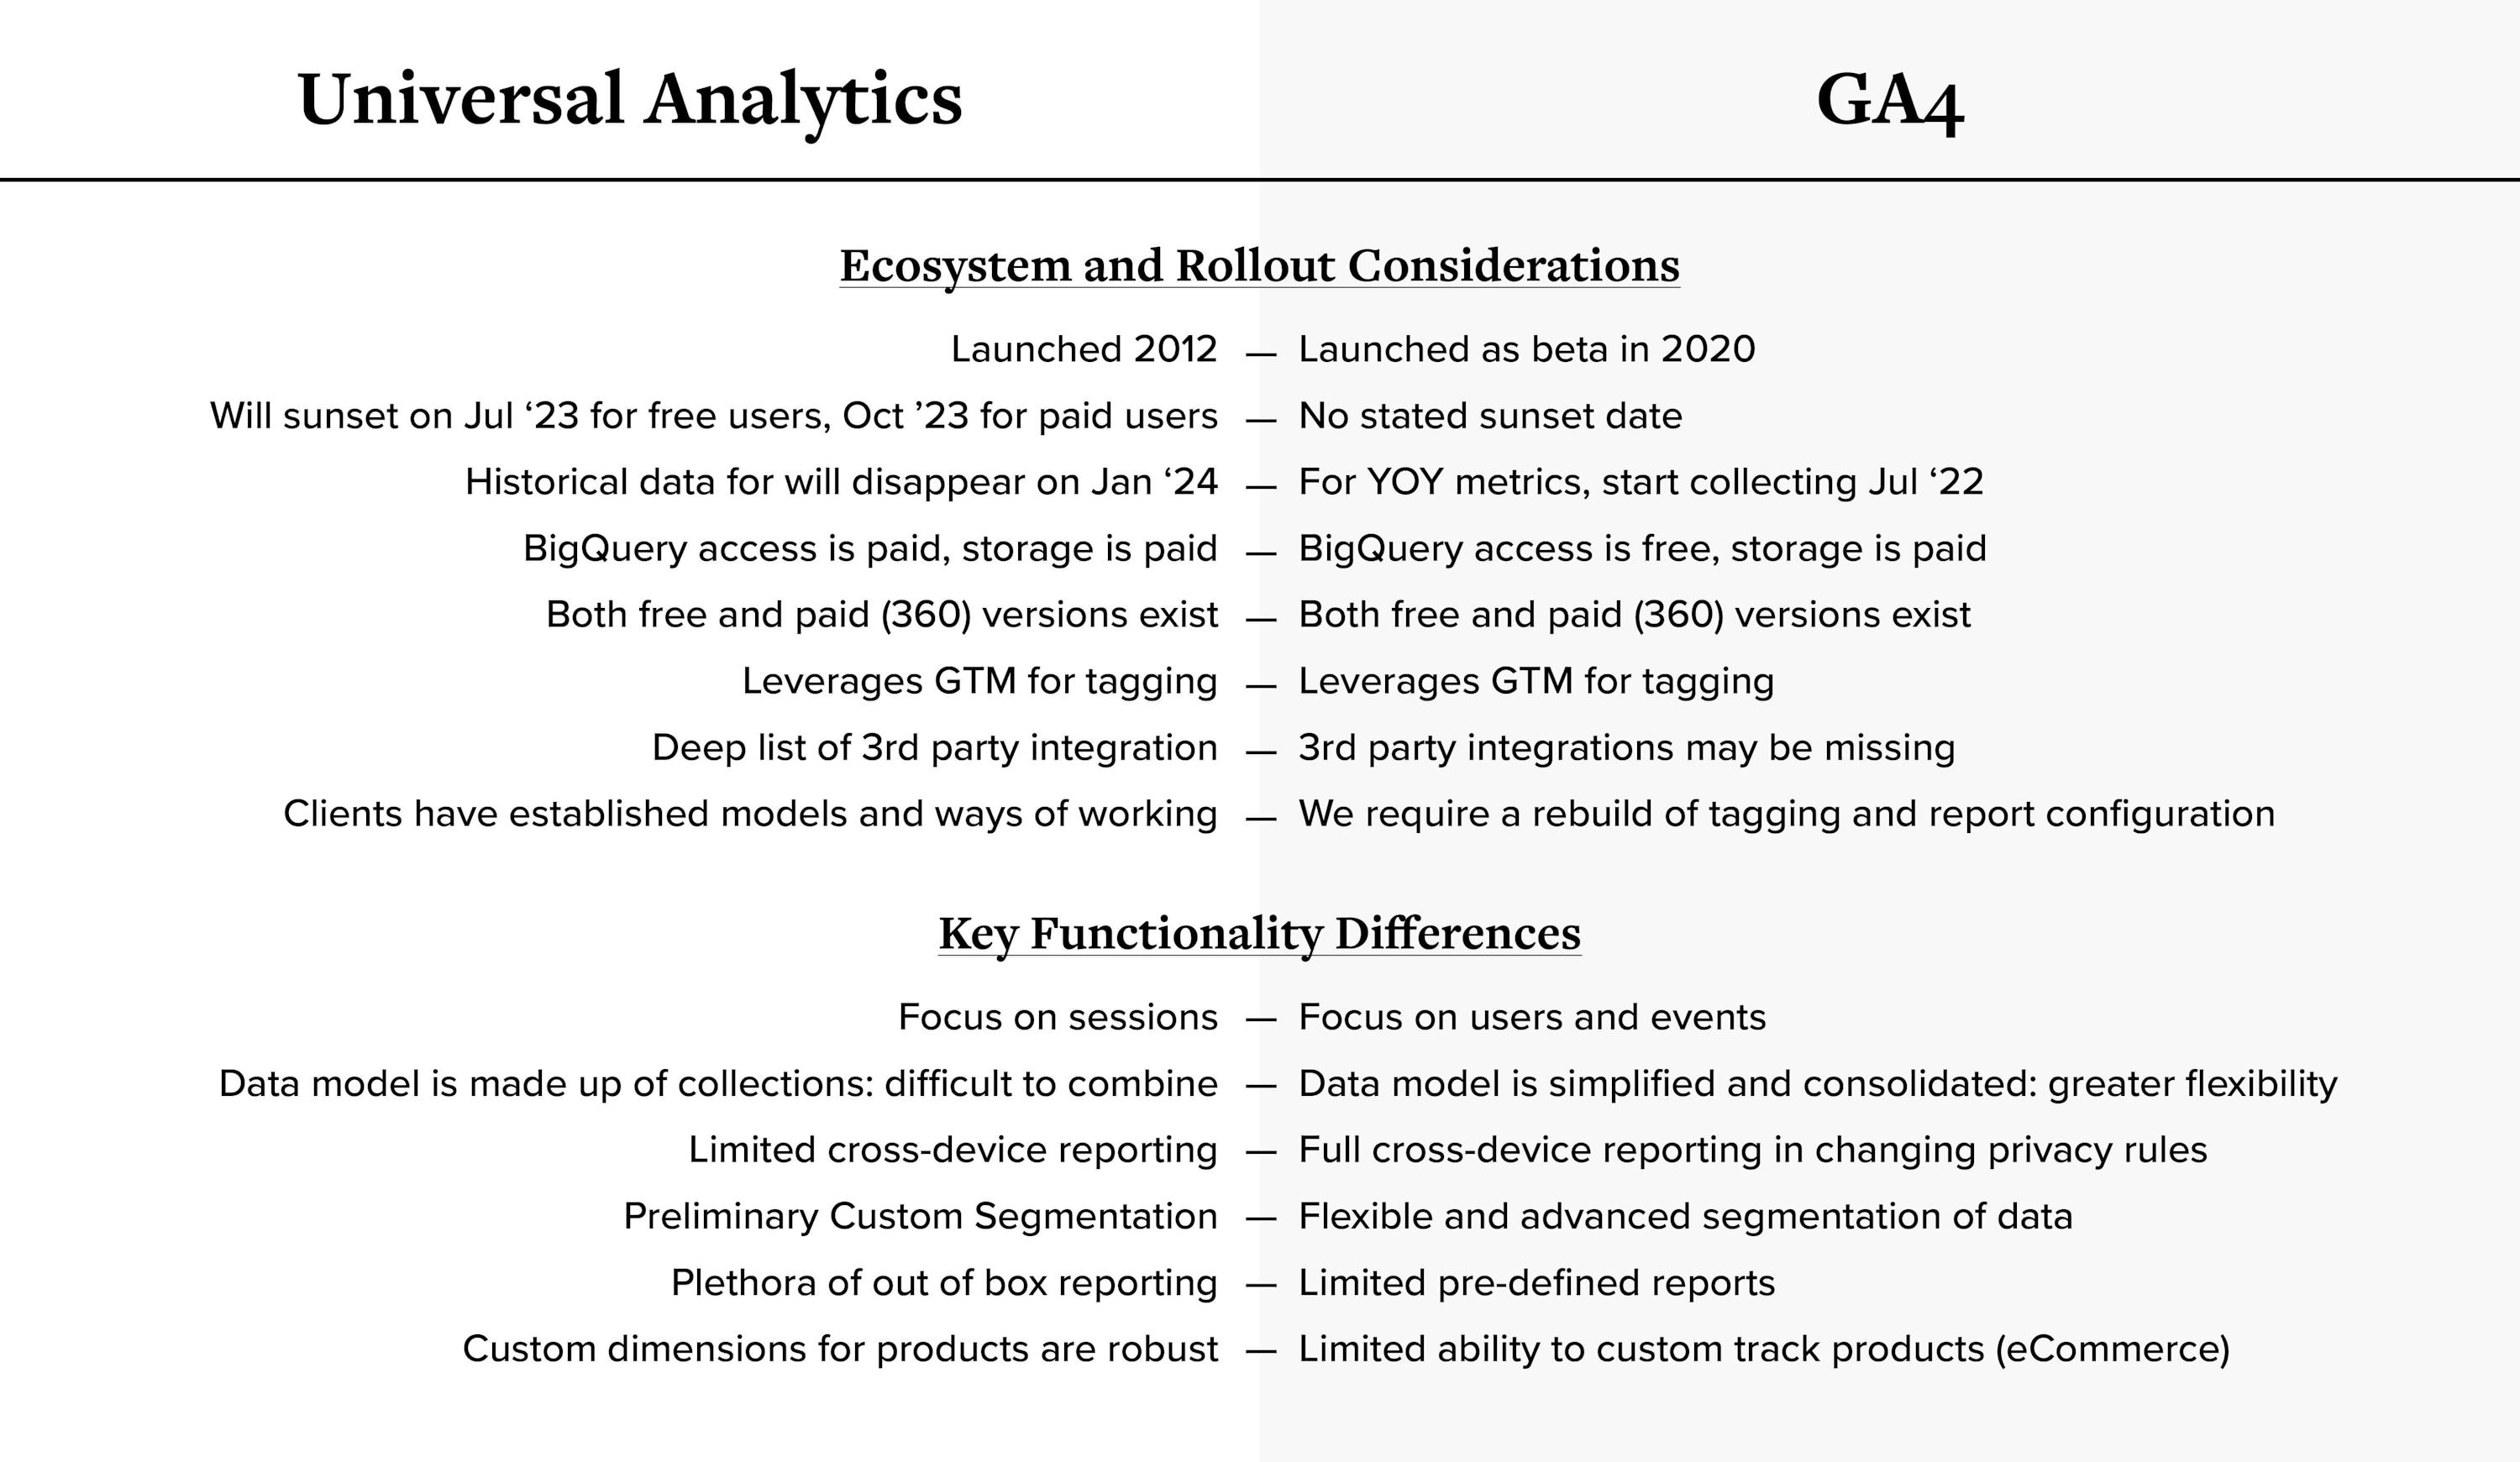 Comparison of universal analytics and GA4